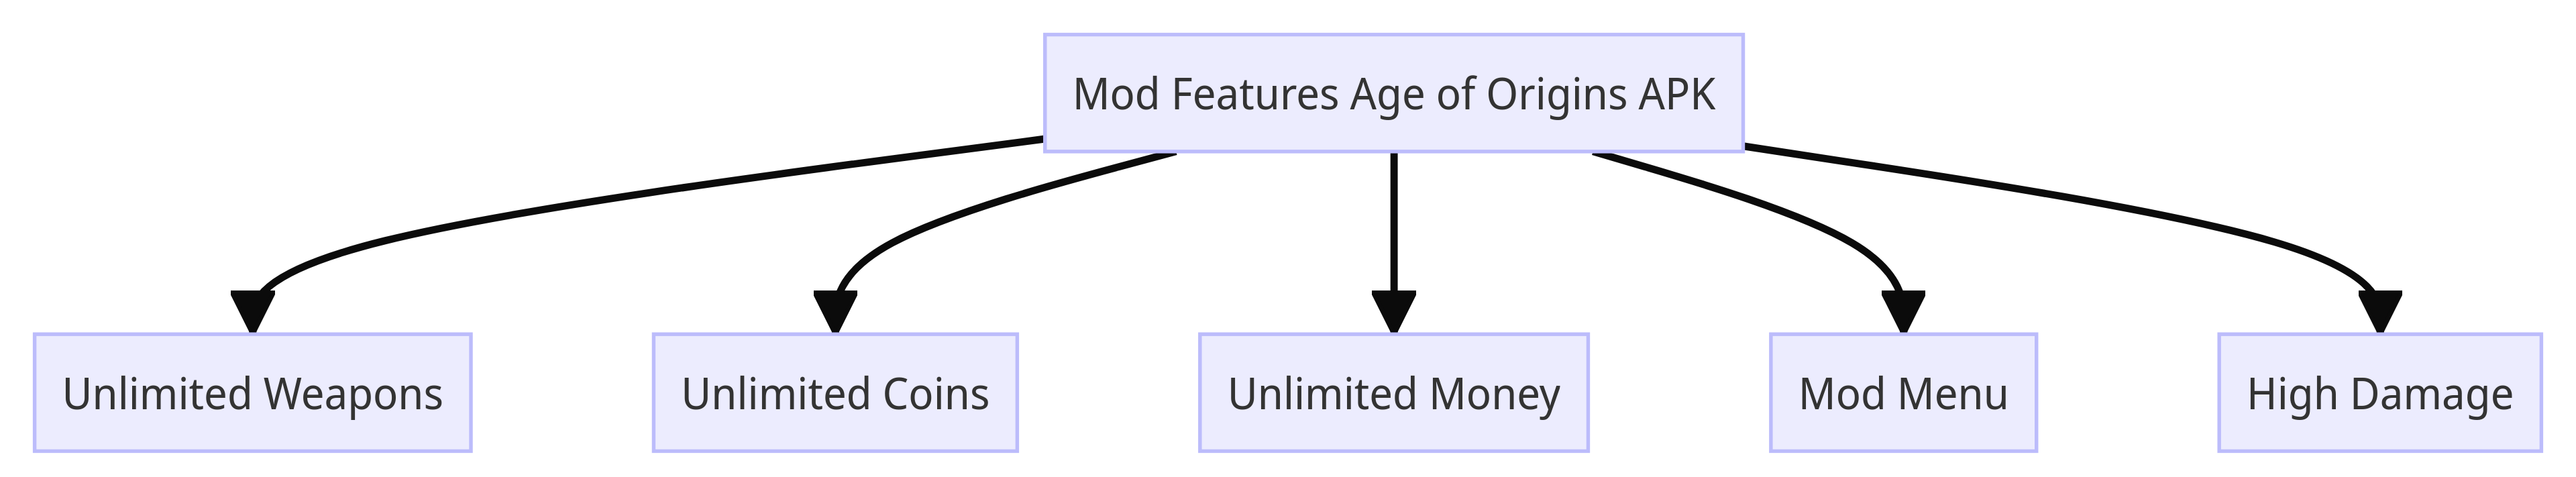 Mod Features Age of Origins APK